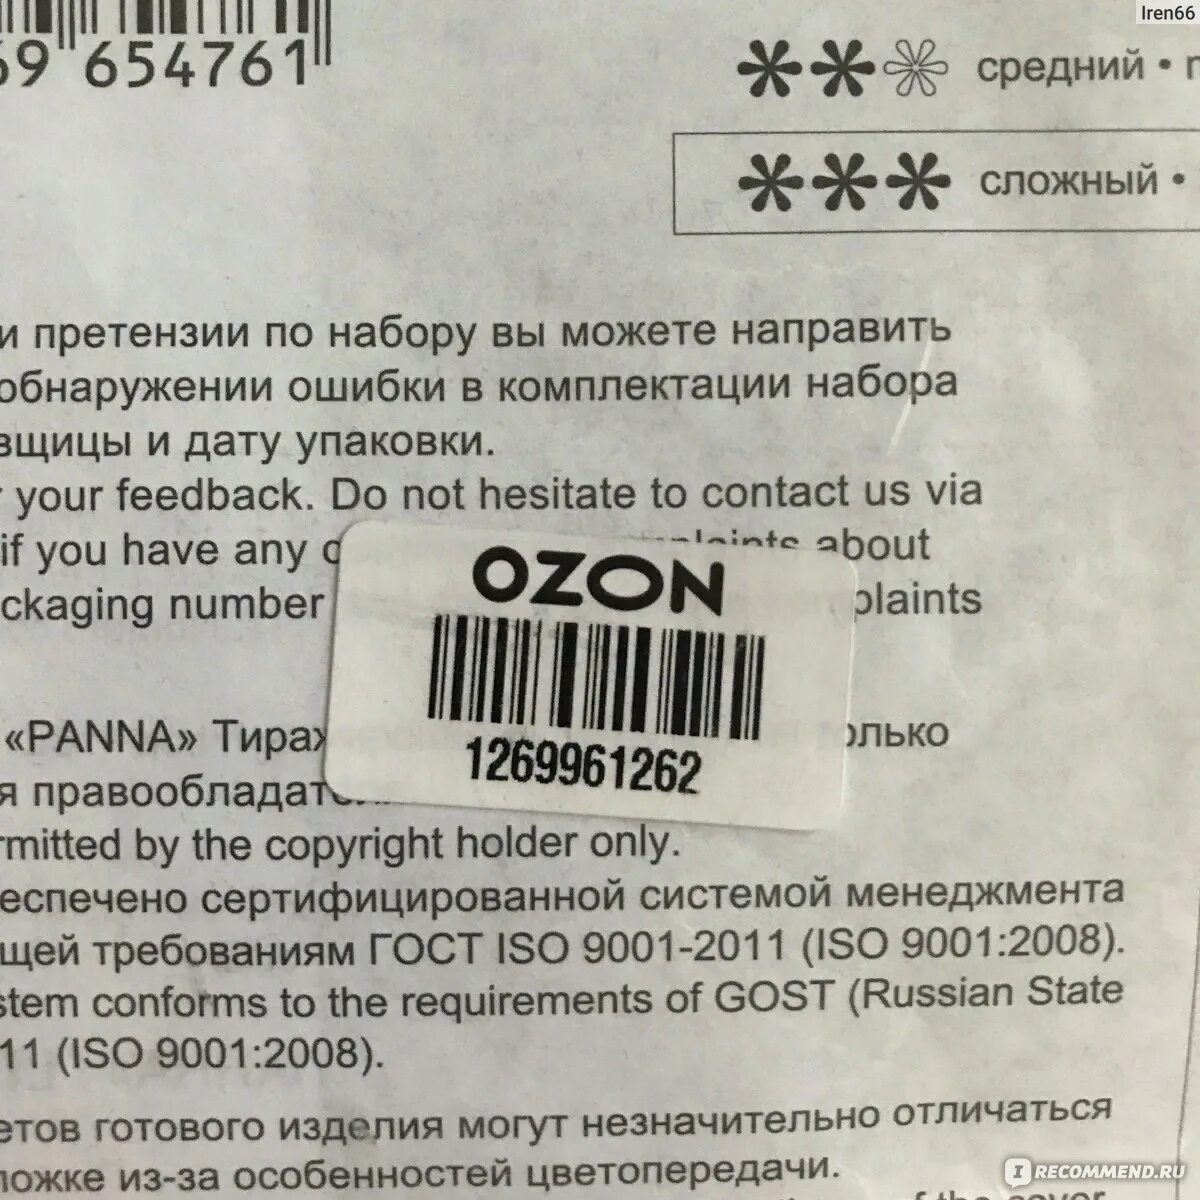 Этикетка на товар для озона. Штрихкод Озон требования. OZON этикетка штрих код. Требования к этикетке Озон. Штрихкод товара на озон